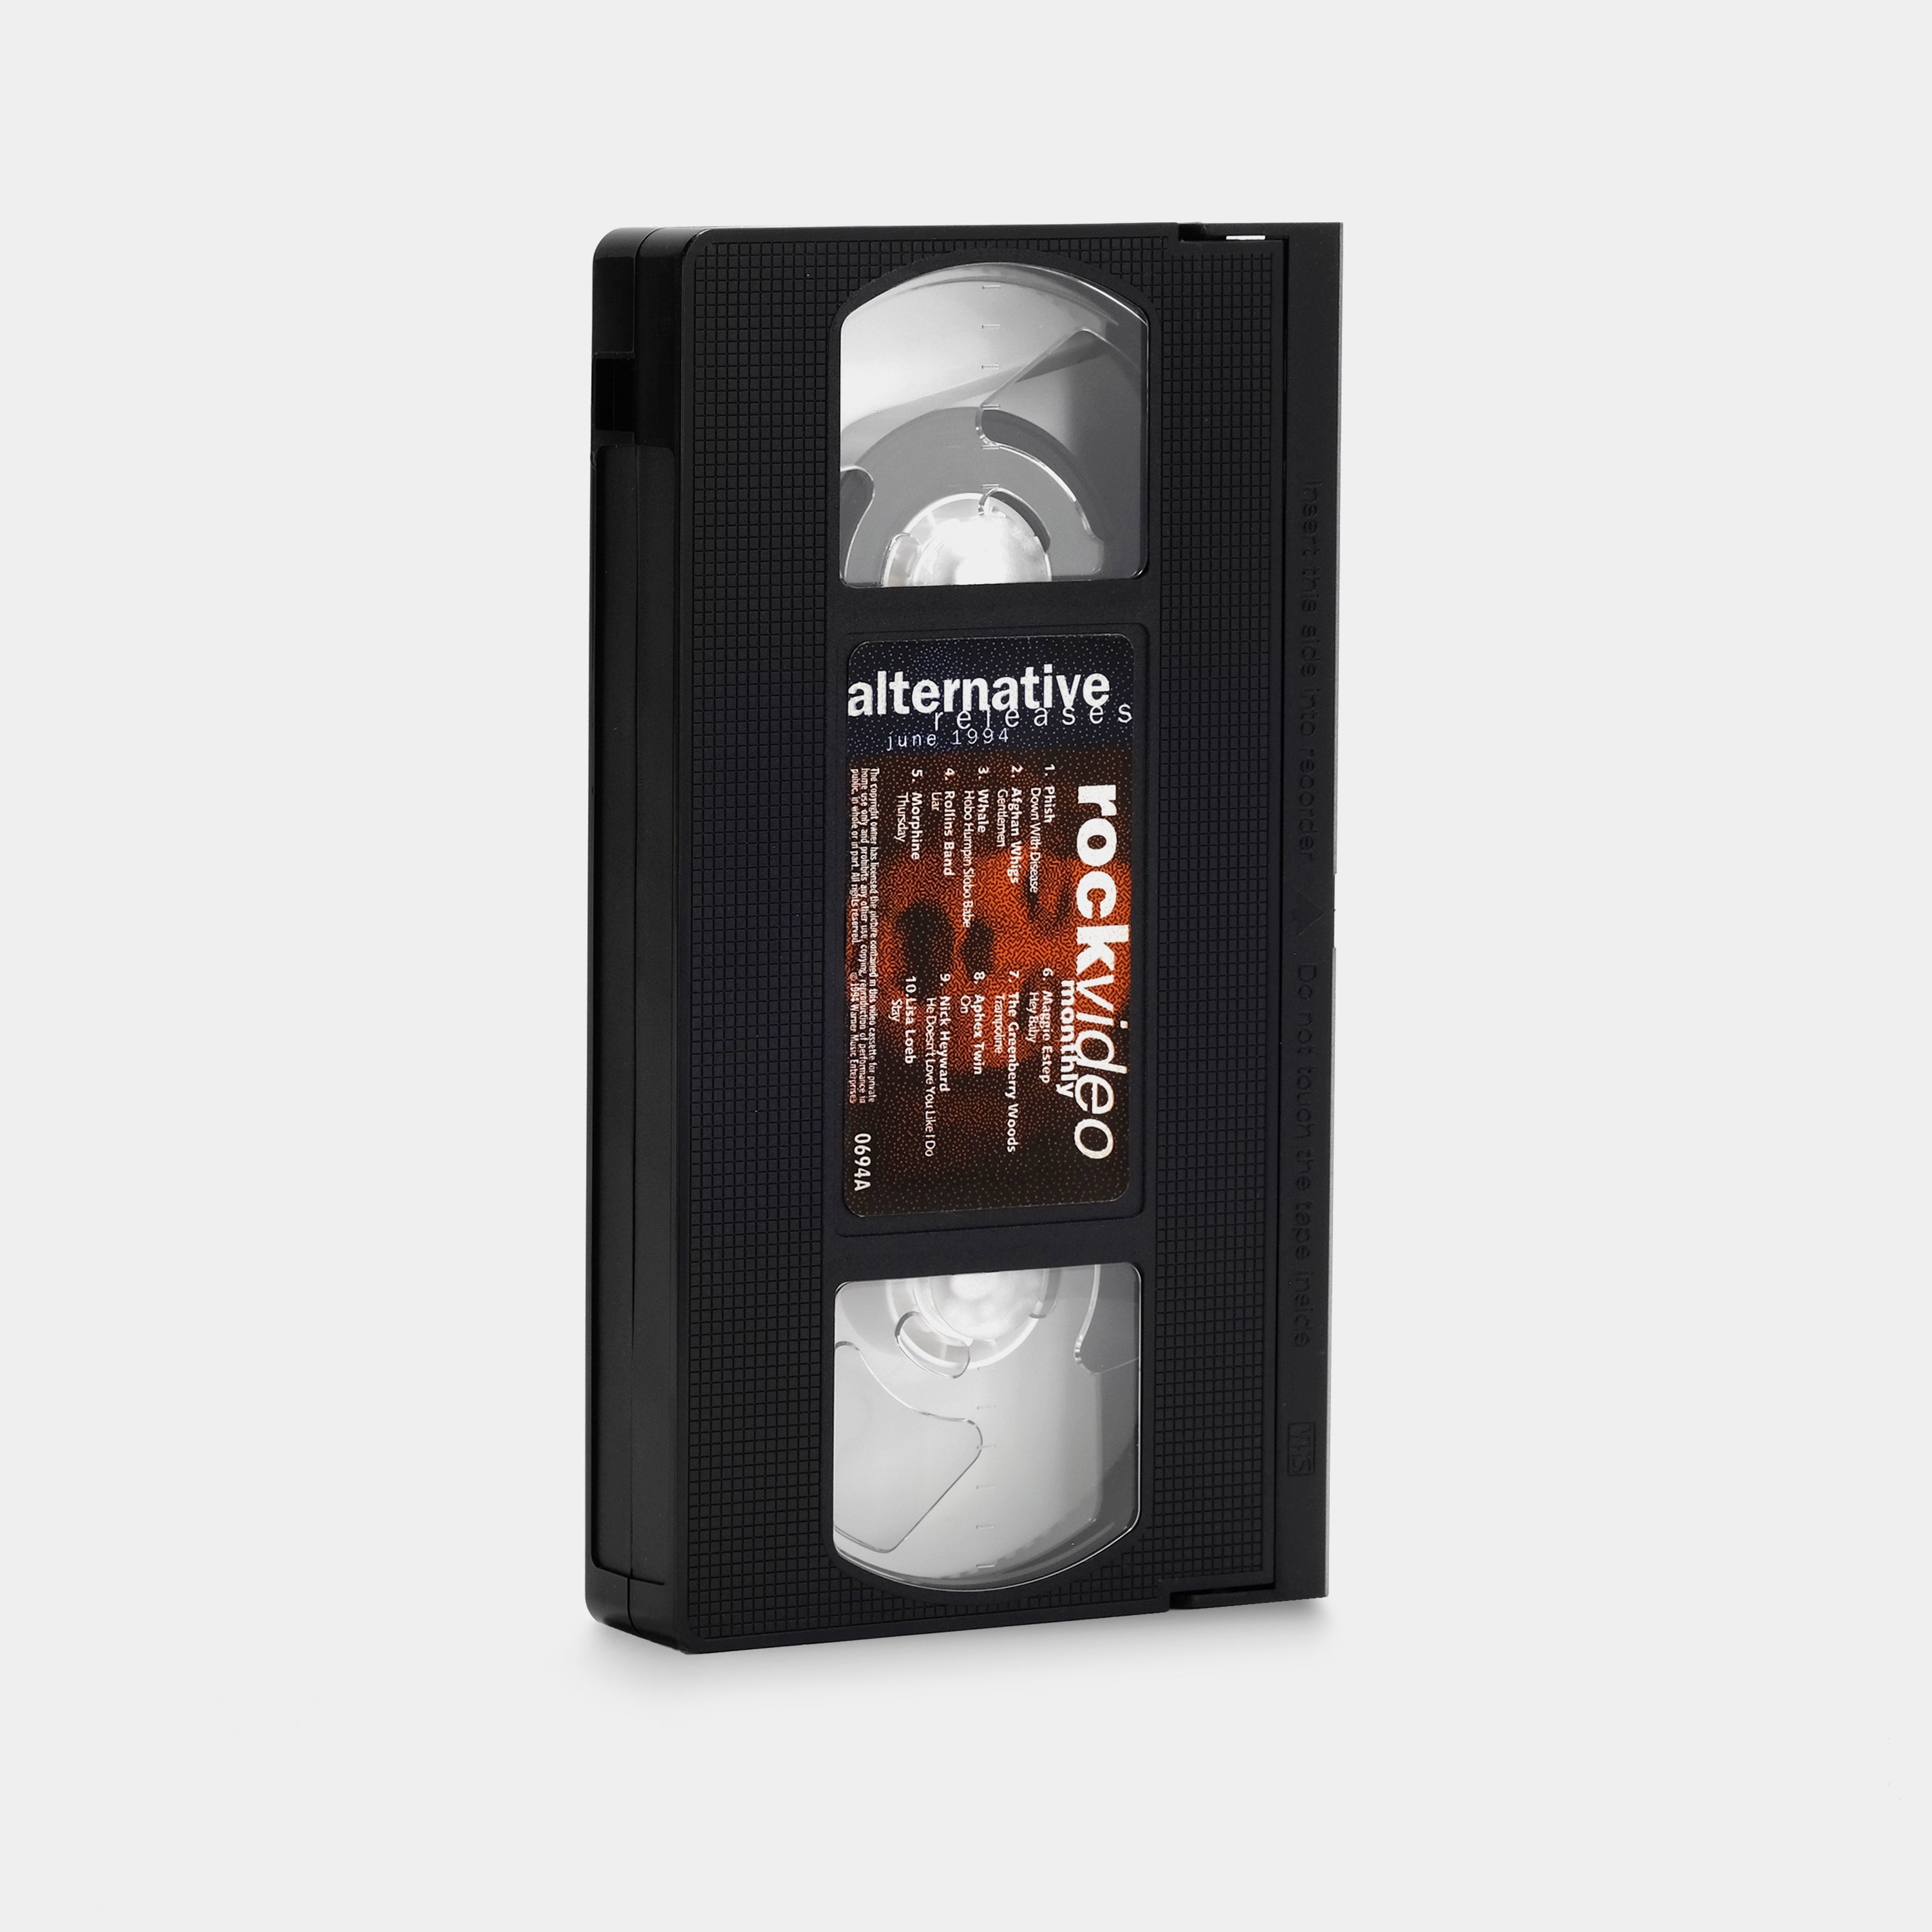 RockVideo Monthly - Alternative Releases June 1994 VHS Tape